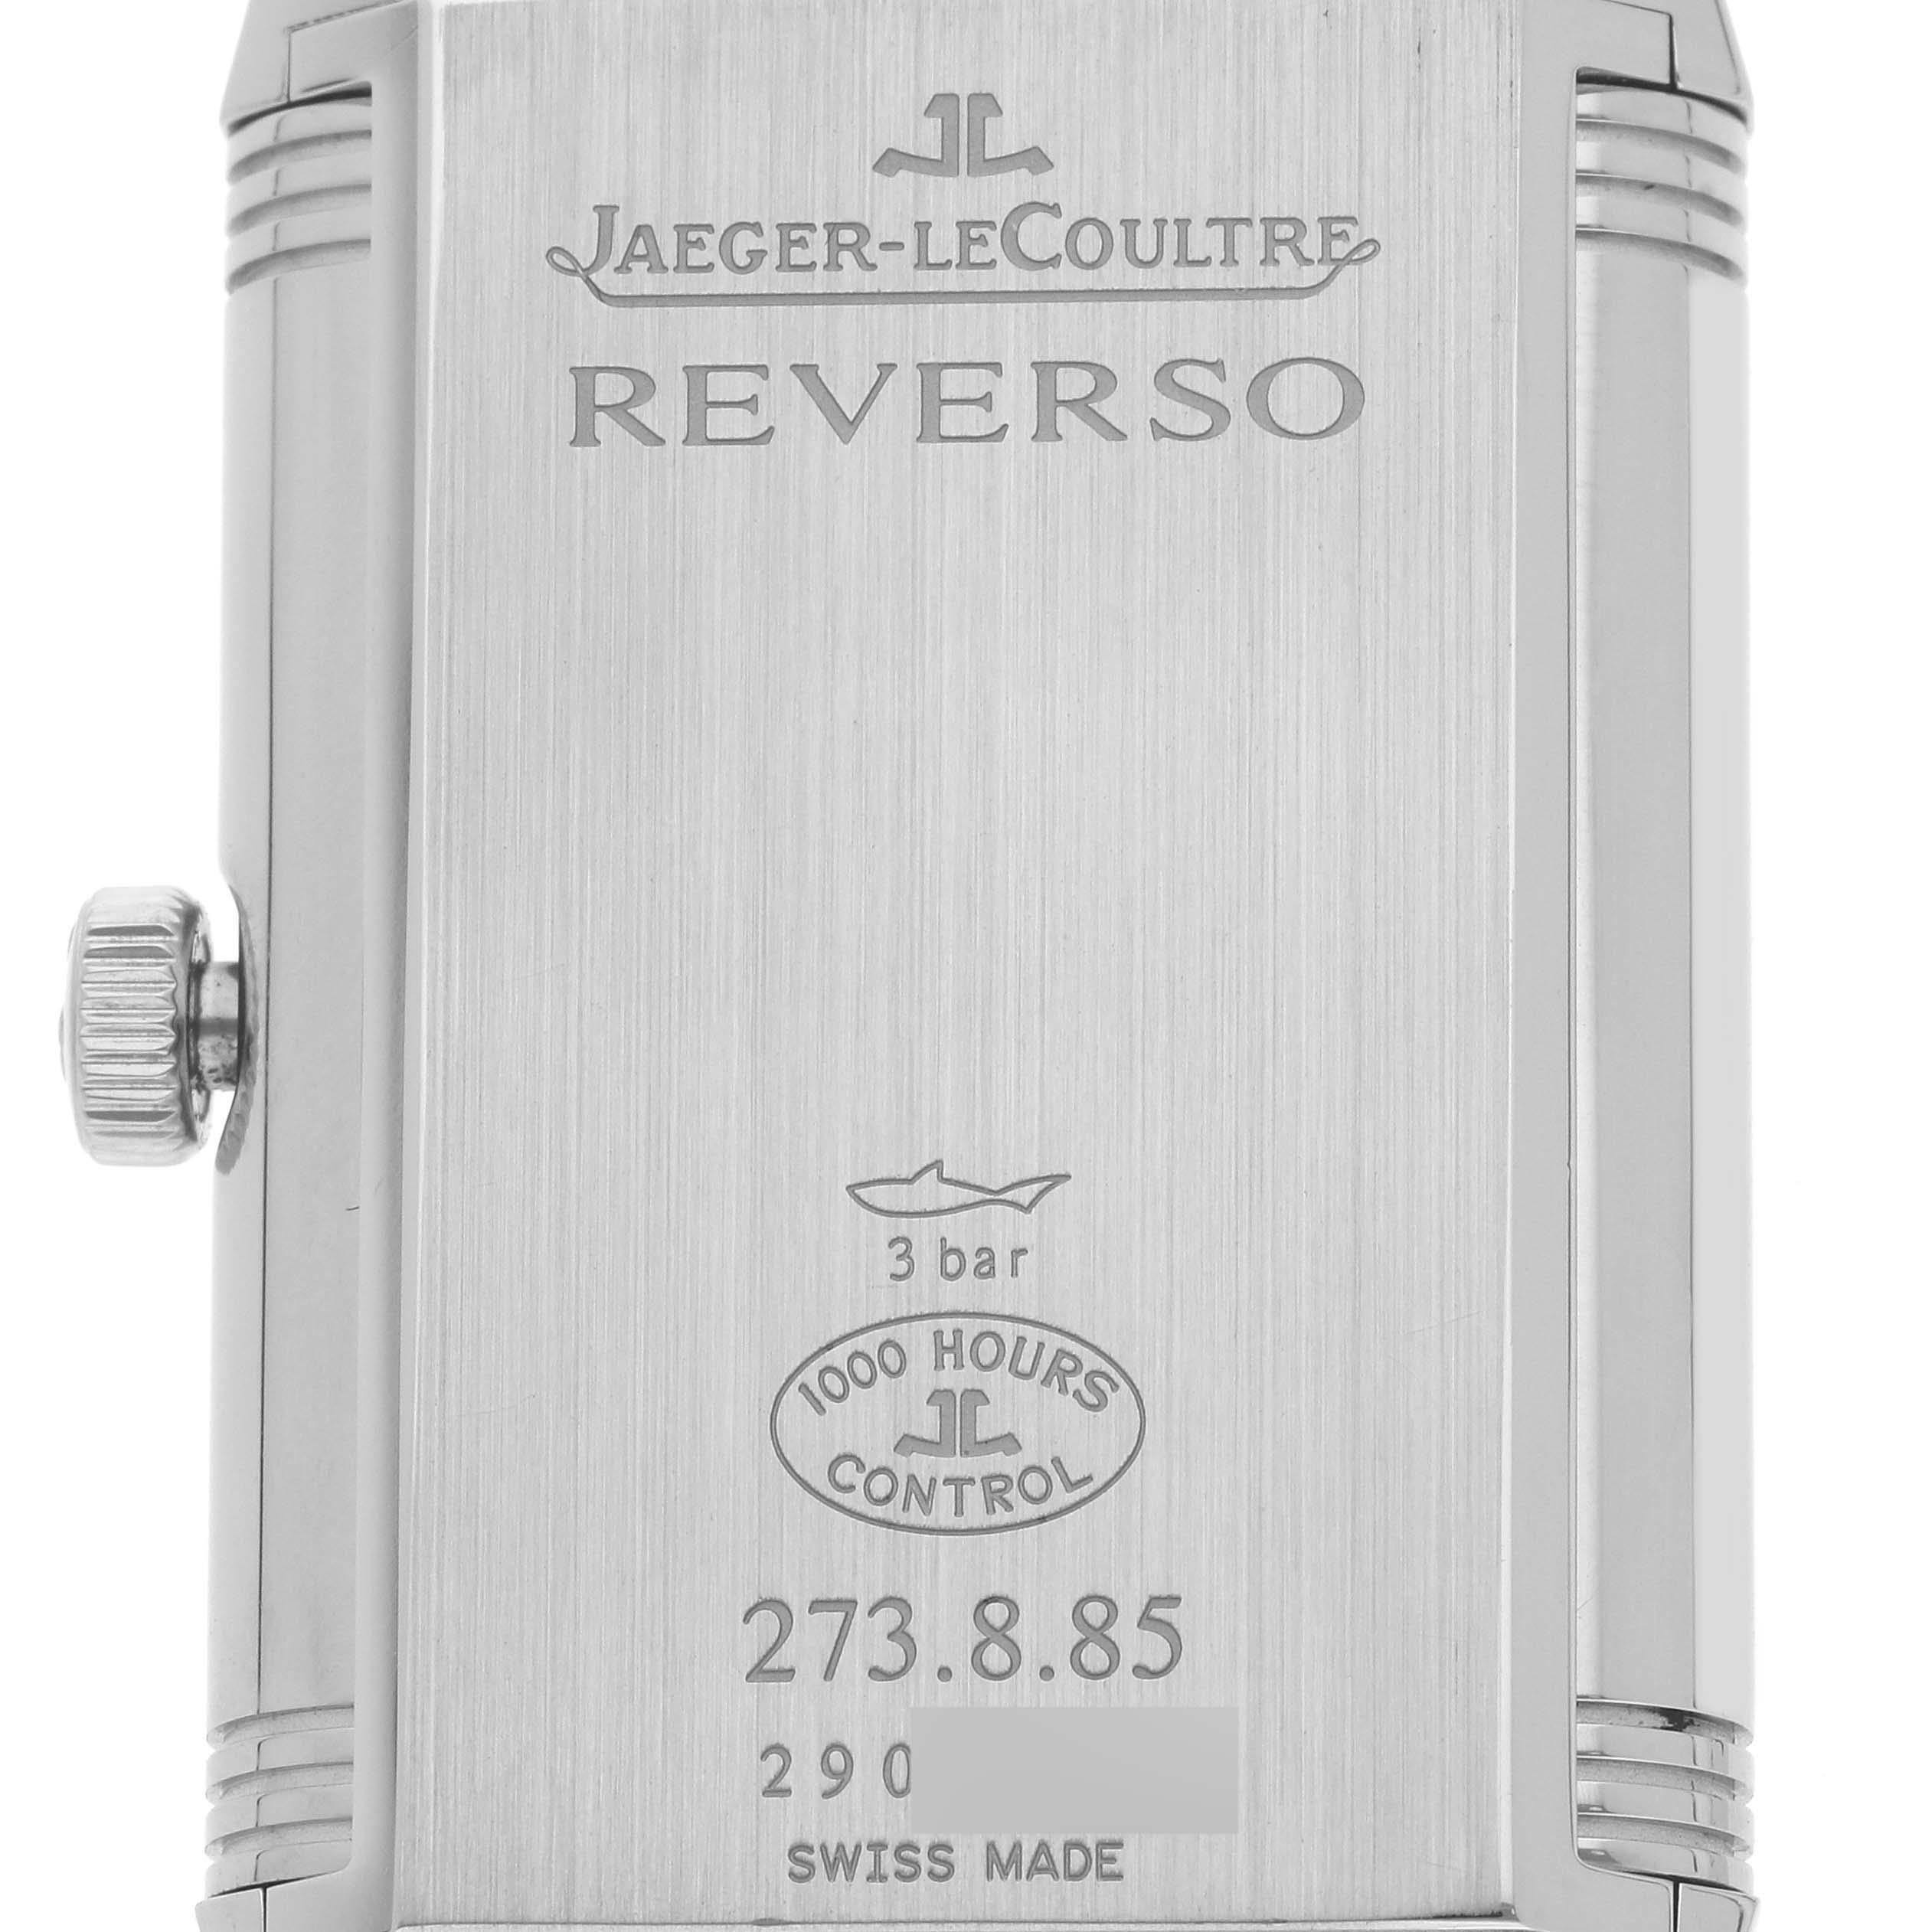 Jaeger LeCoultre Grande Reverso Steel Mens Watch 273.8.85 Q3748421 For Sale 4